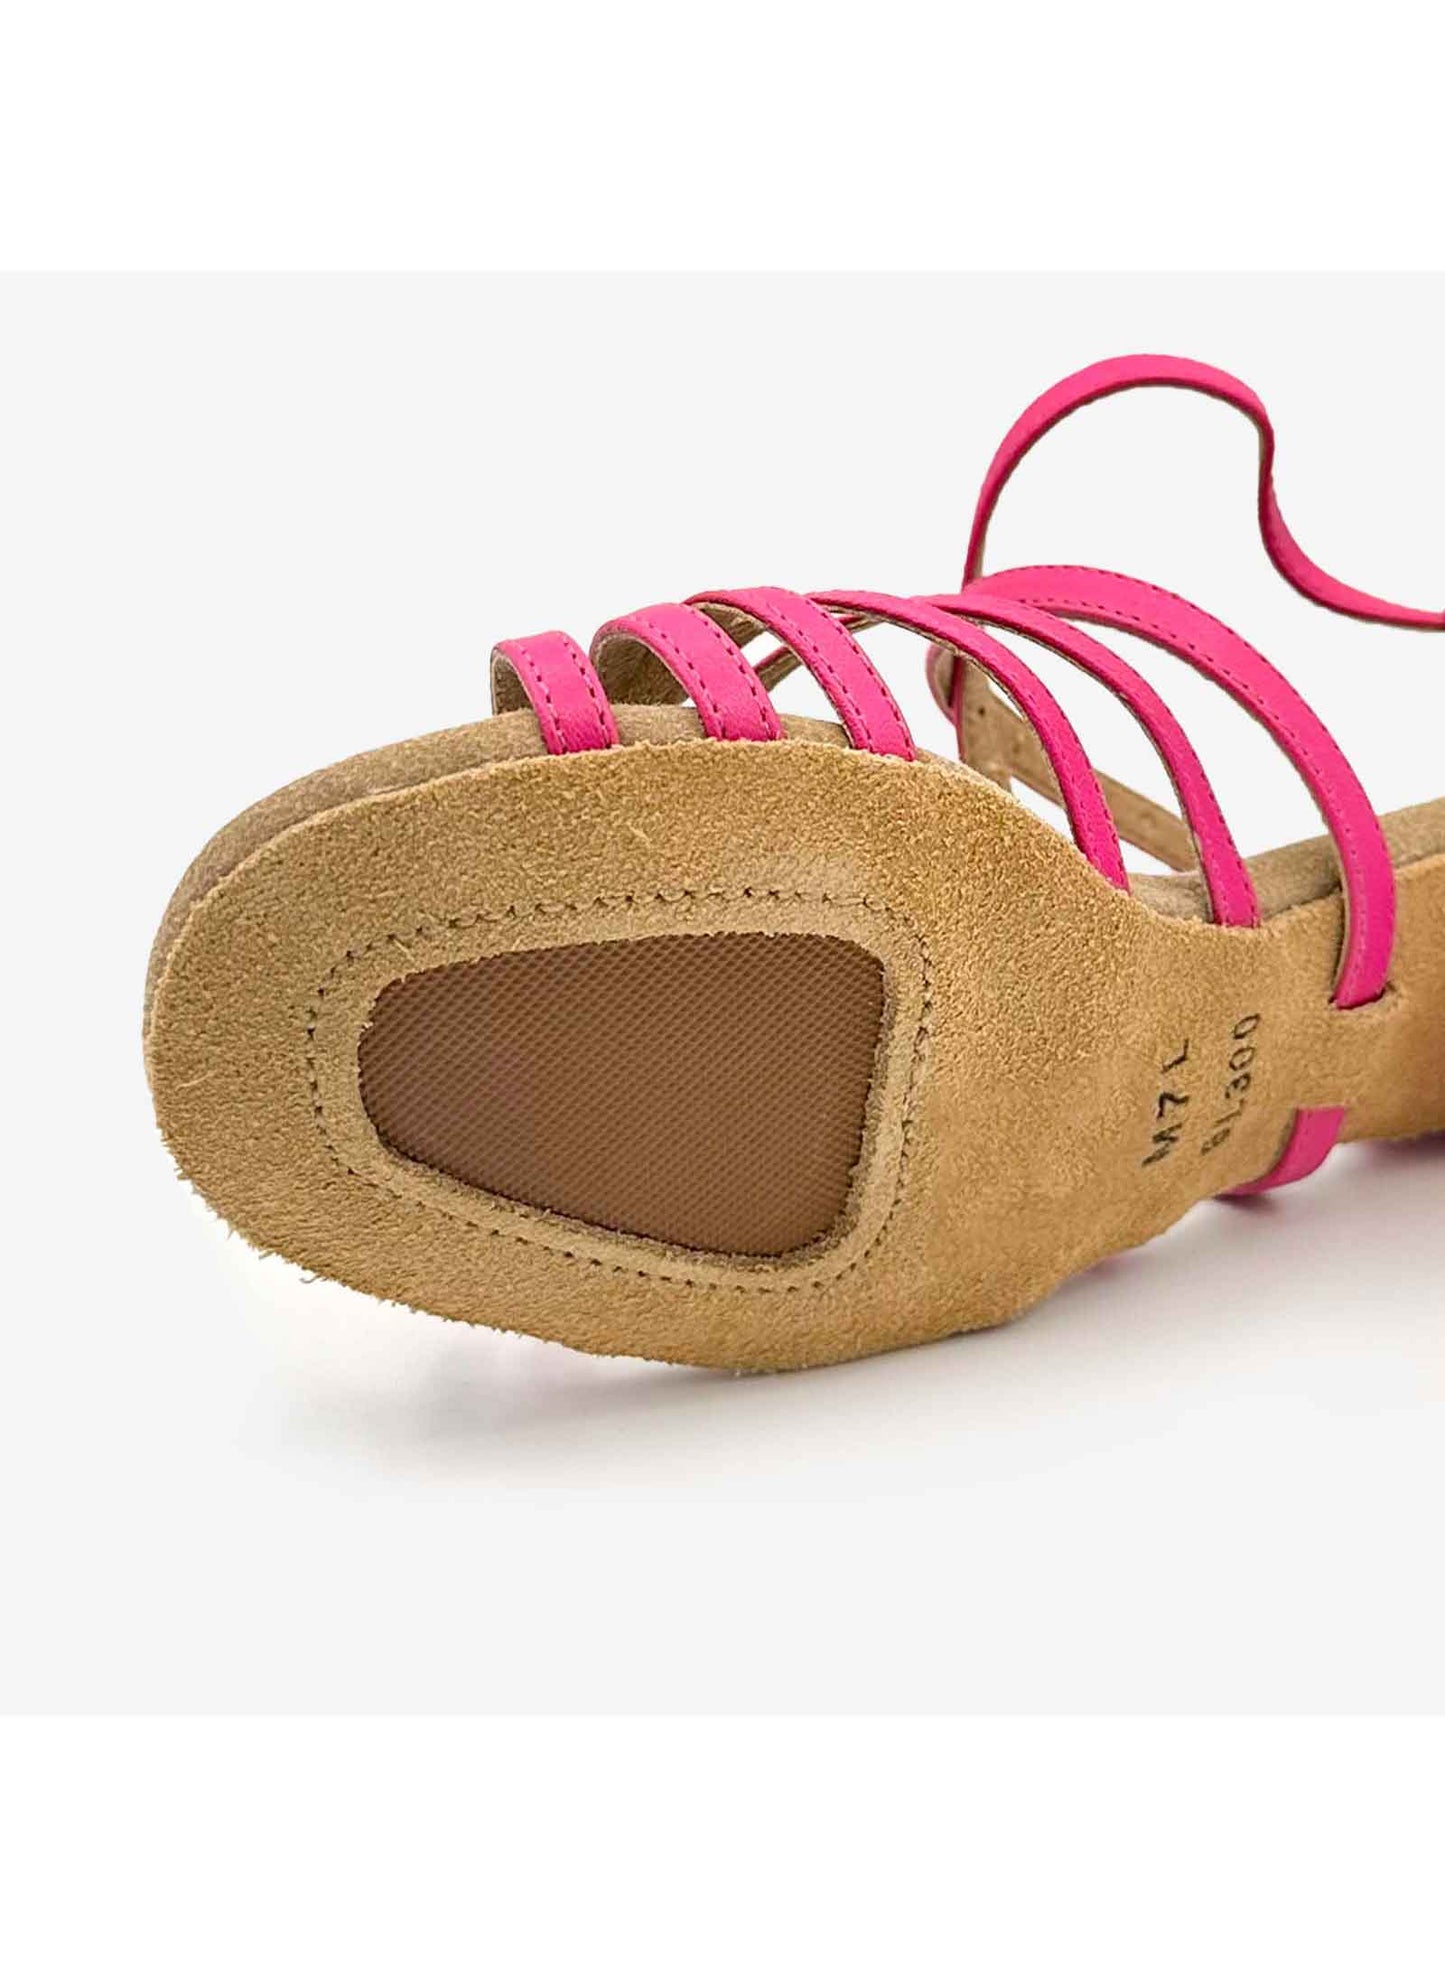 Lacey Schwimmer Pink Ballroom Shoes 1 1/4" Heel